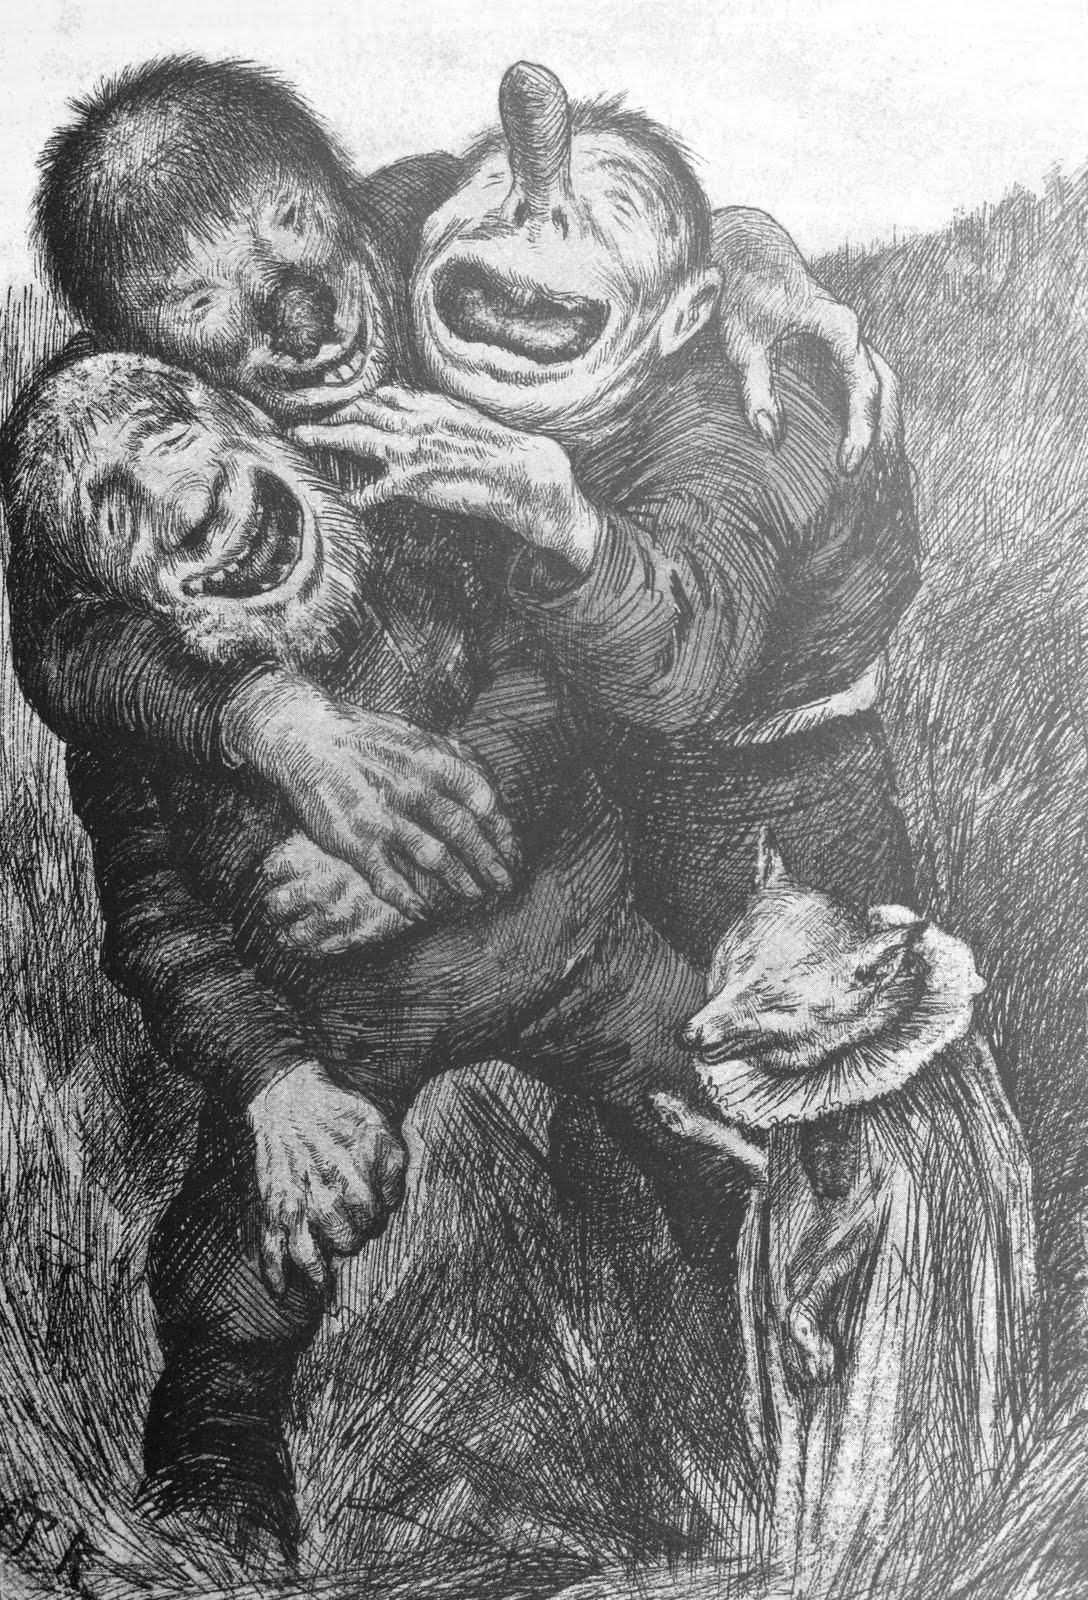 norwegian troll drawing